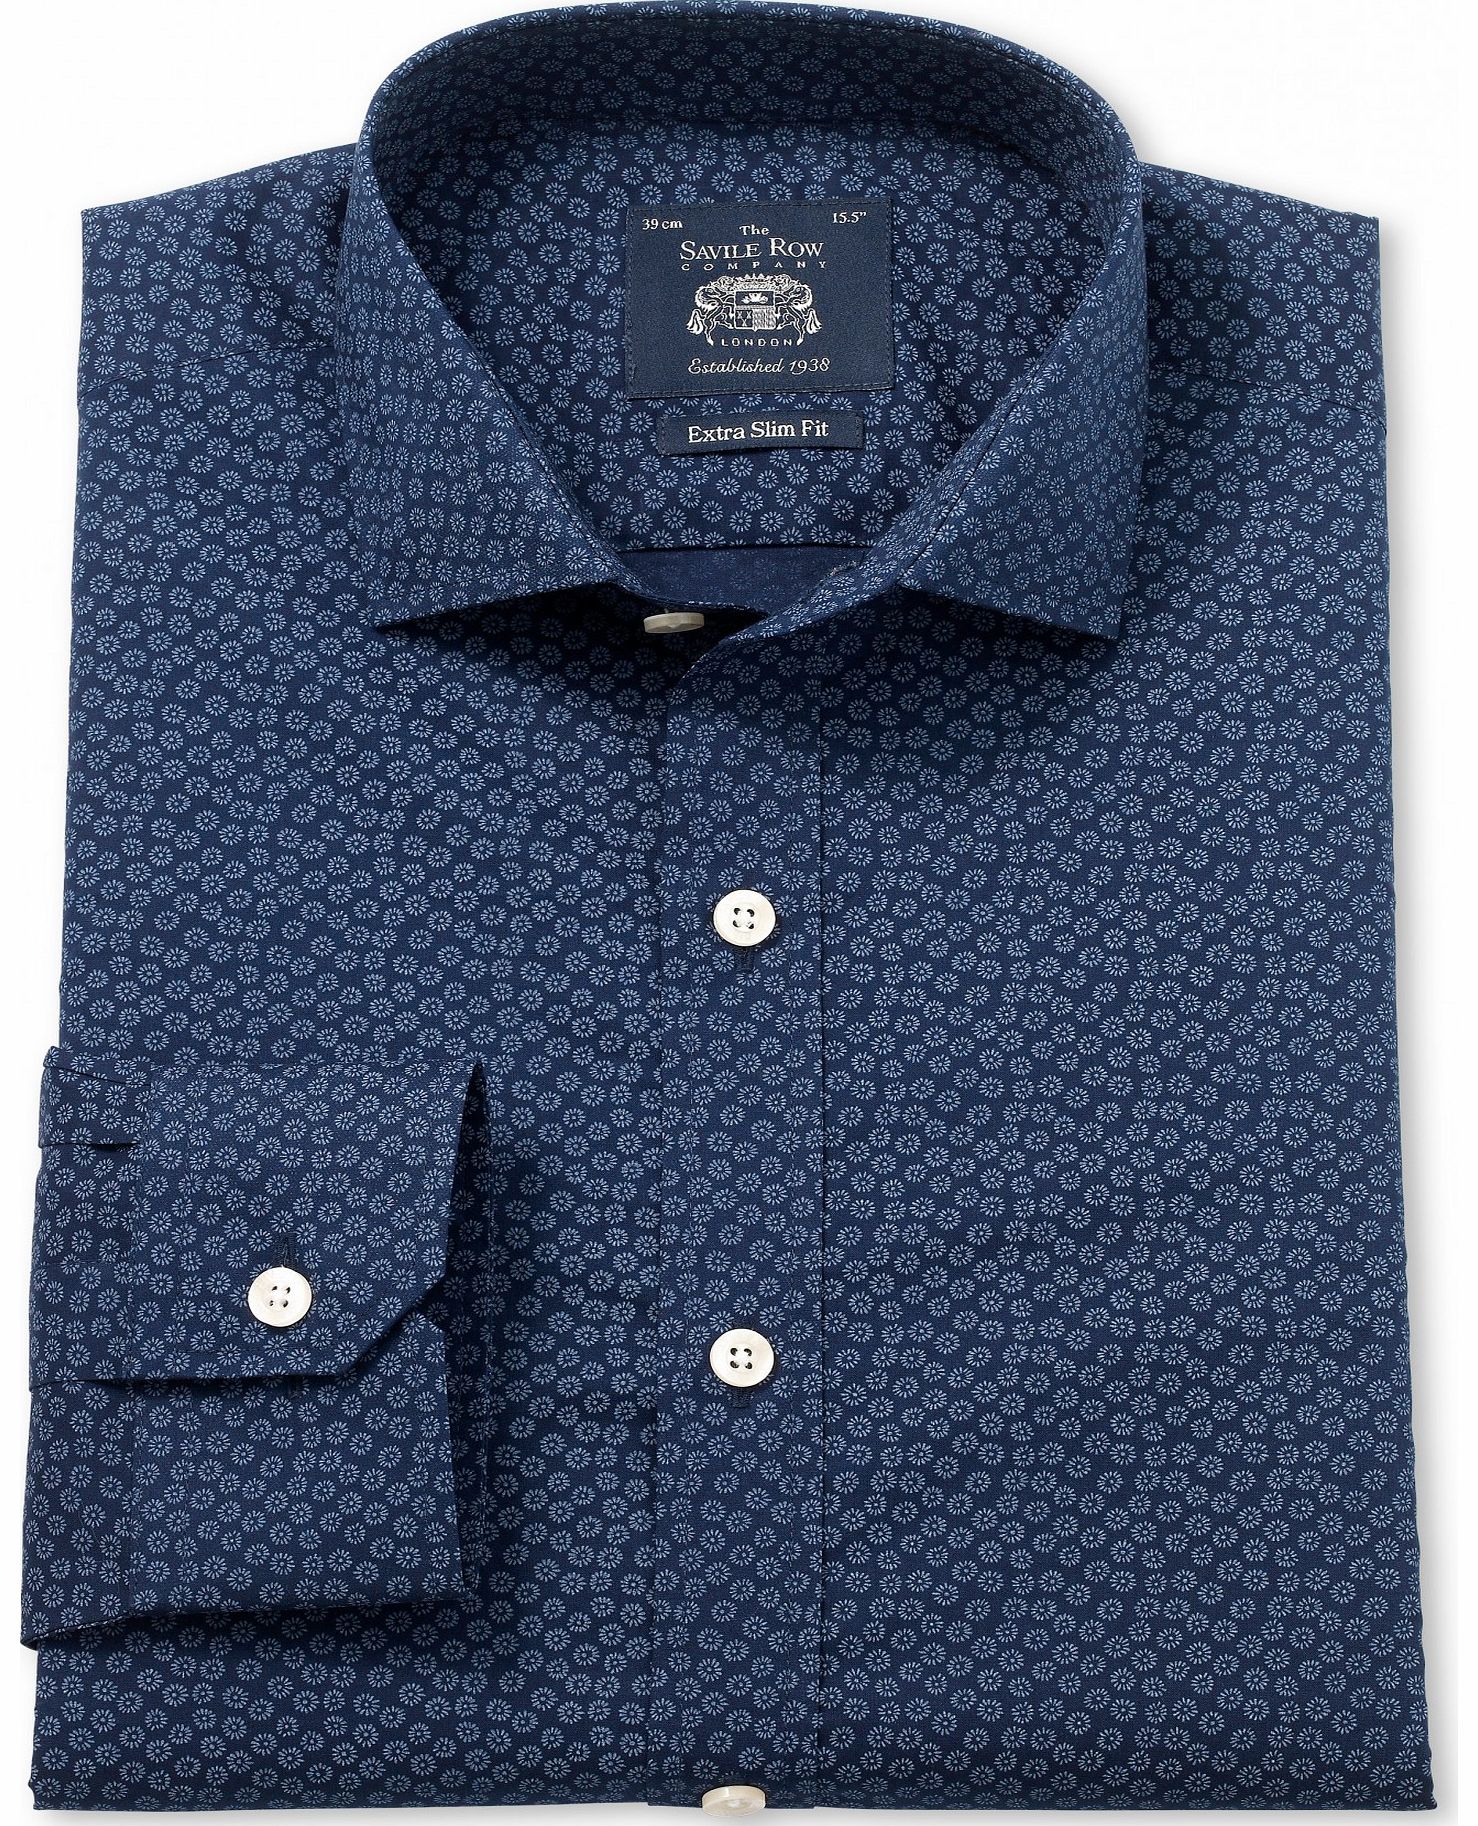 Navy Blue Printed Extra Slim Fit Shirt 15``